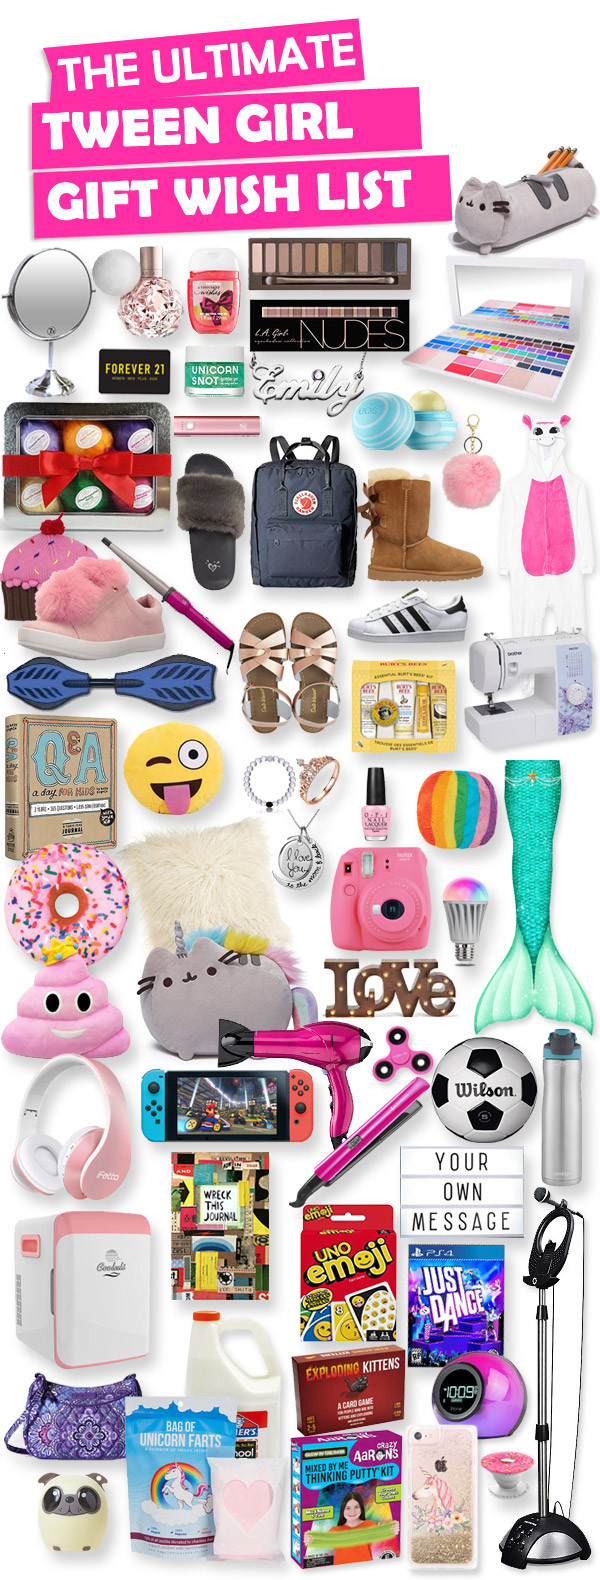 Tween Birthday Gift Ideas
 Gifts For Tween Girls